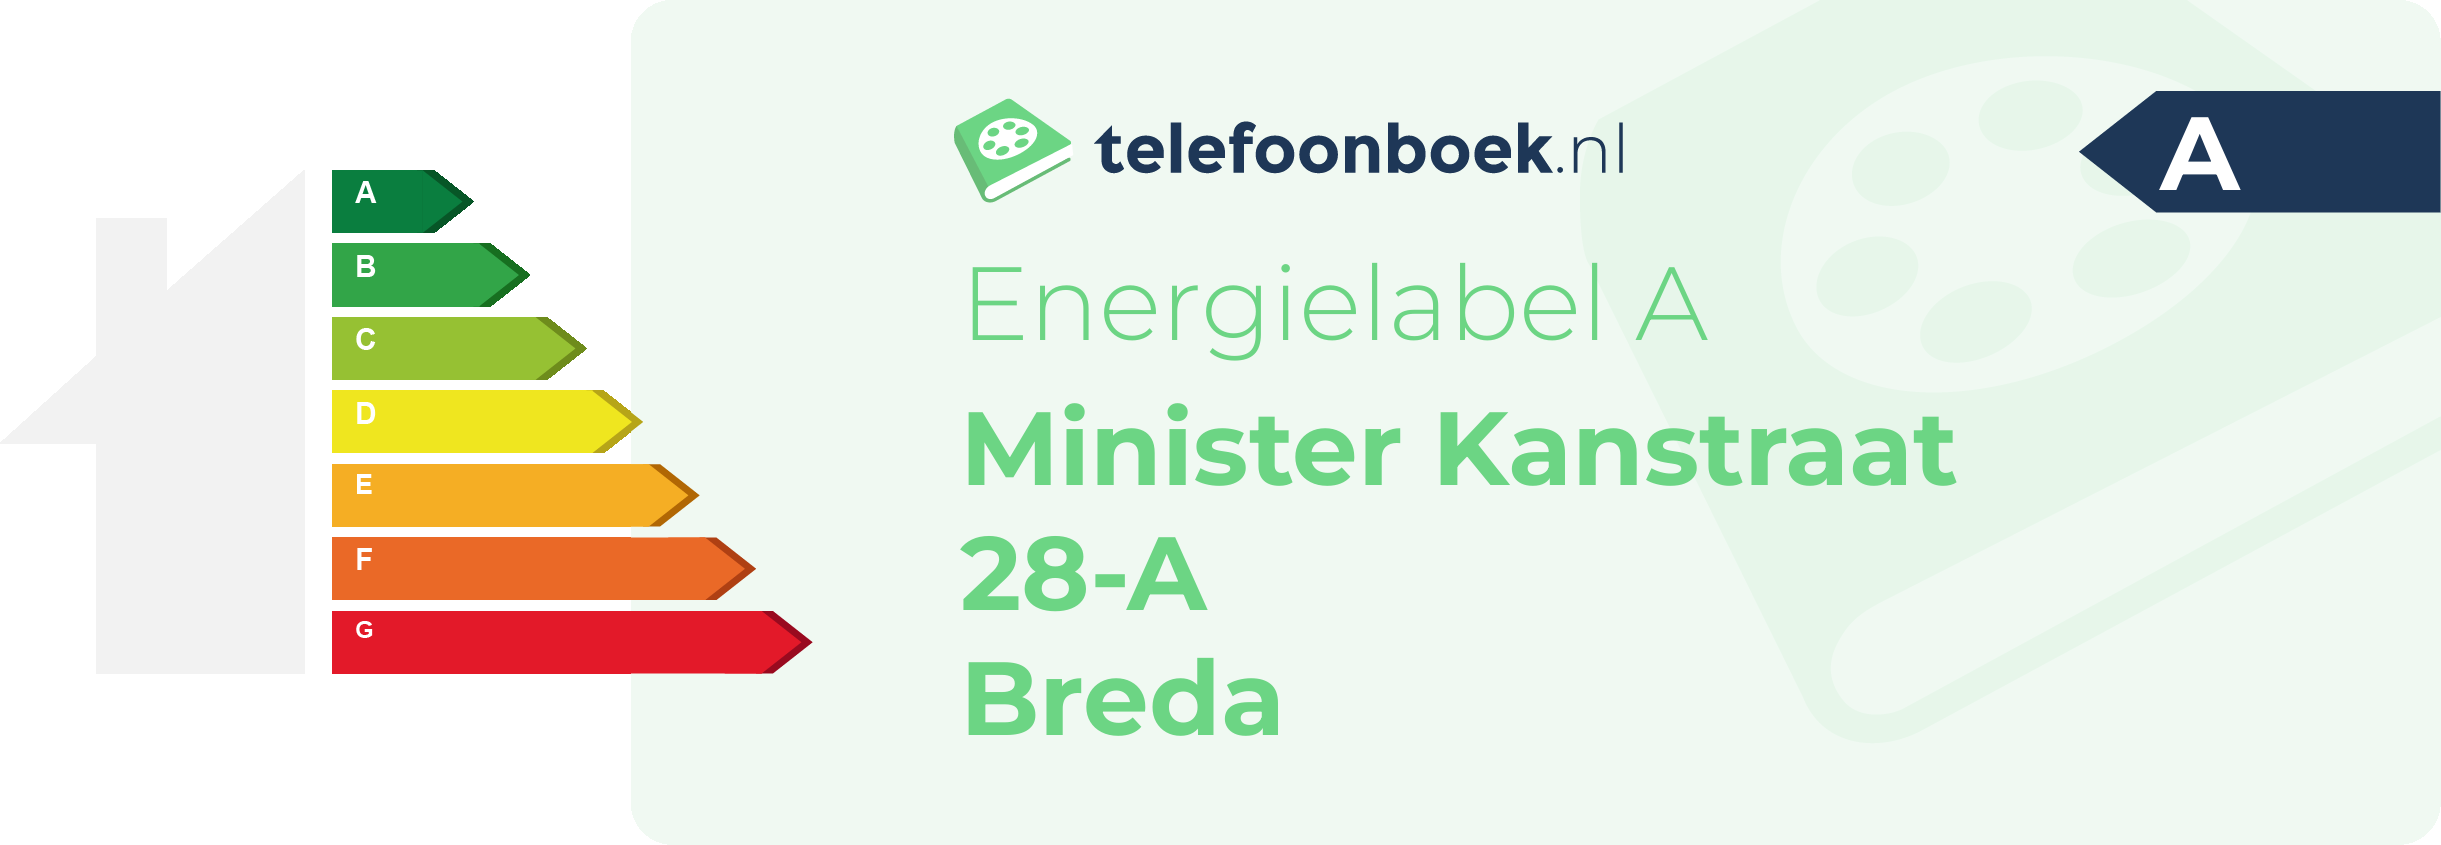 Energielabel Minister Kanstraat 28-A Breda